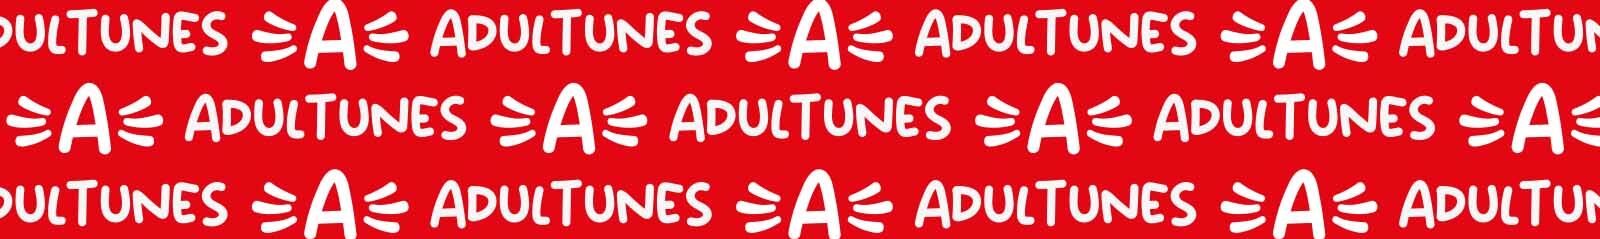 Adultunes